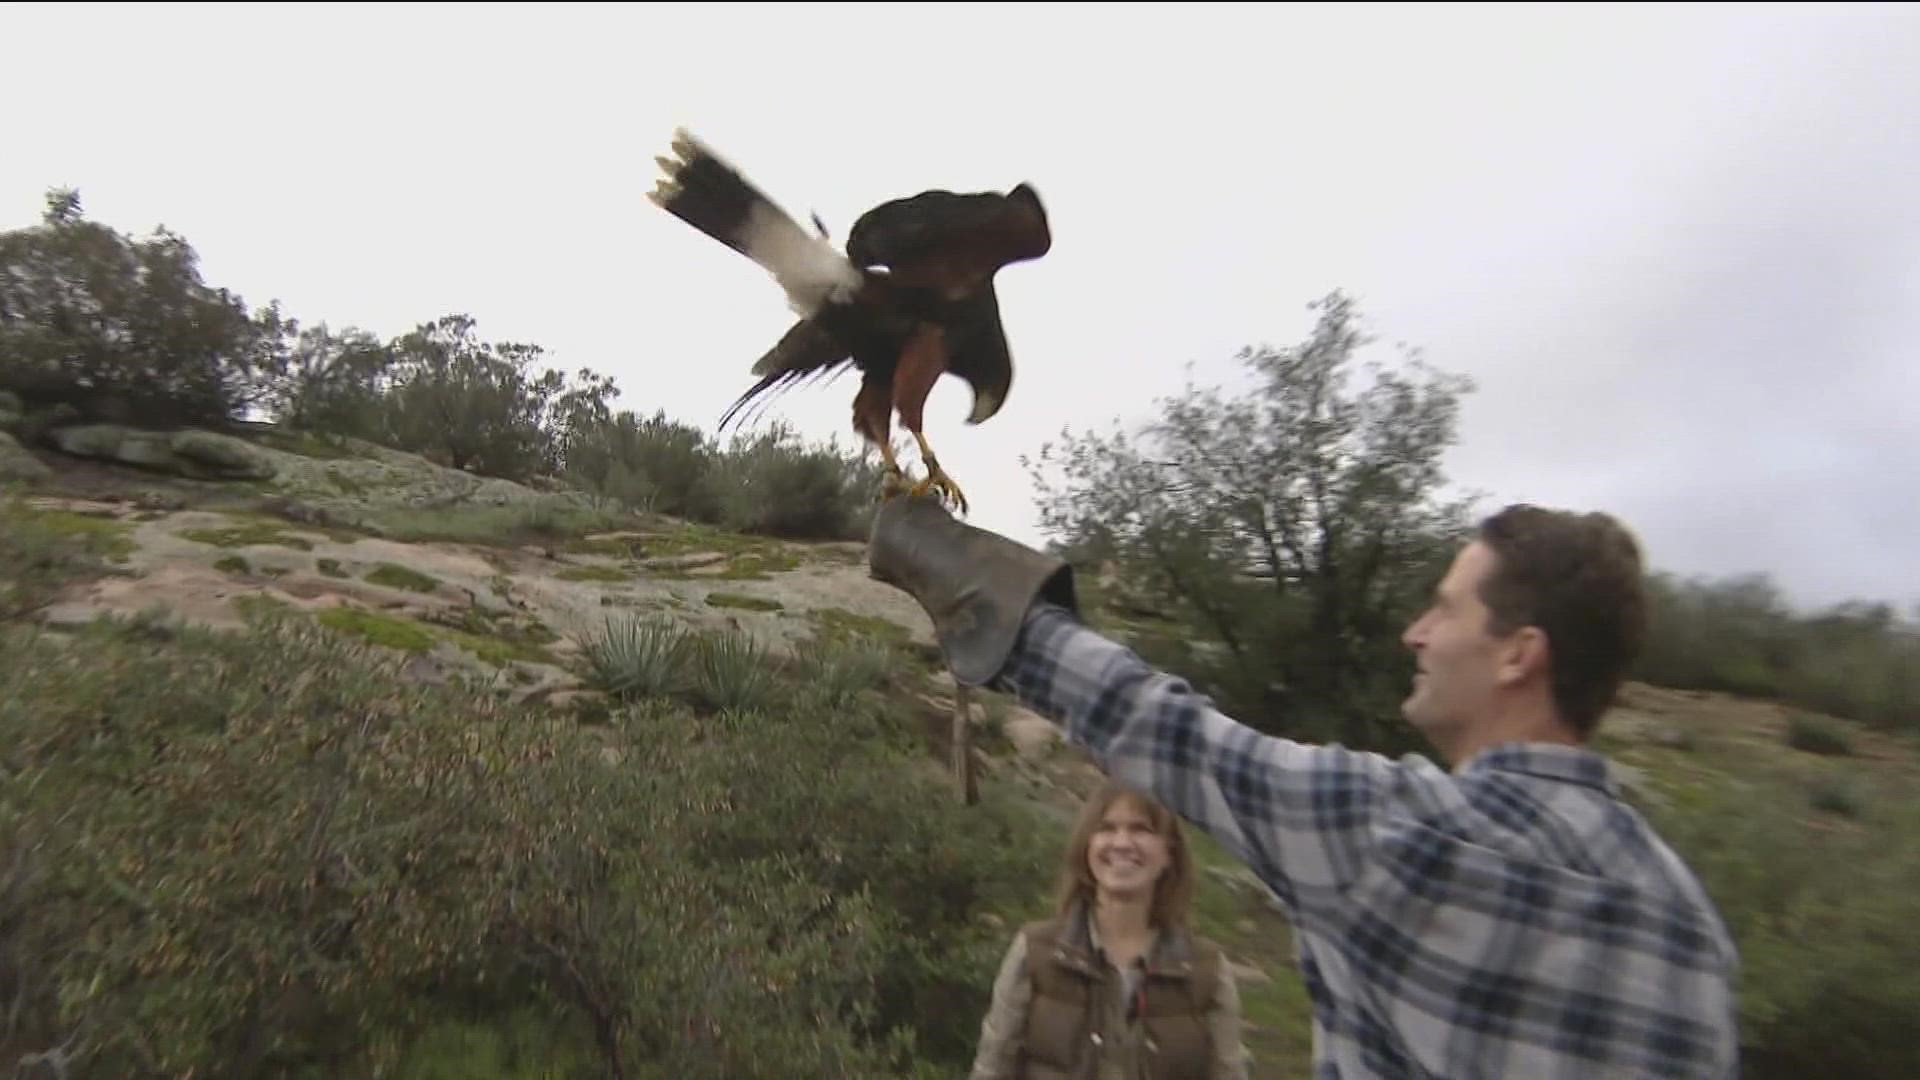 The Avian Behavior Ranch offers 'Art of Flight' experiences starting at $77.